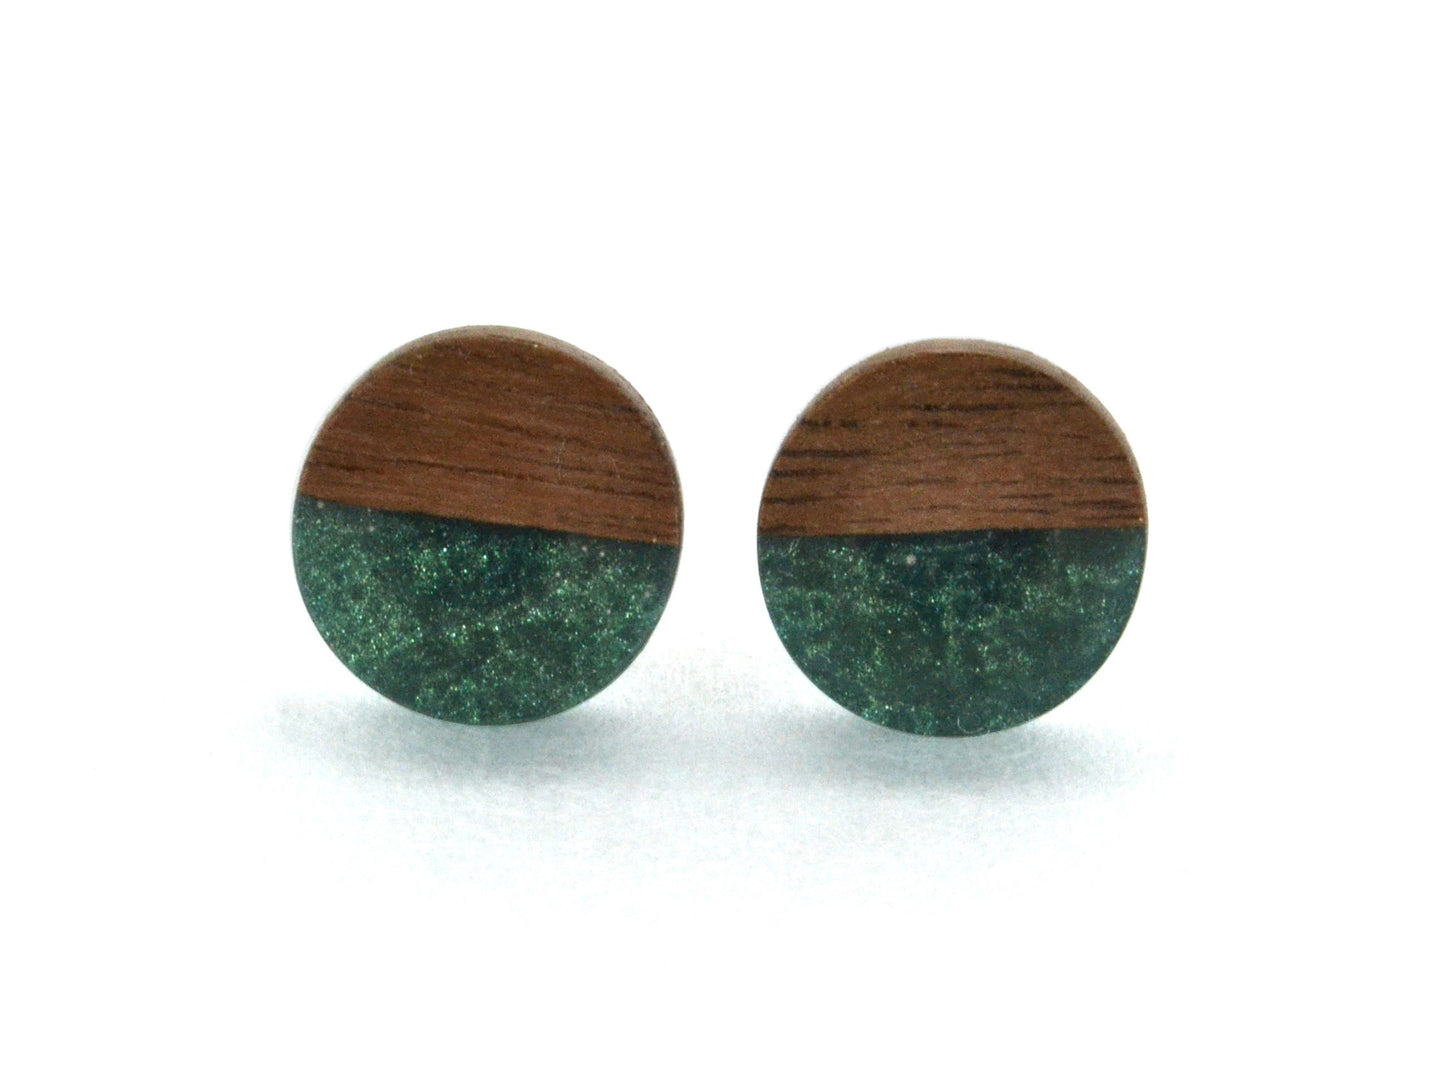 forest green and dark walnut round earring studs, half moon accent design